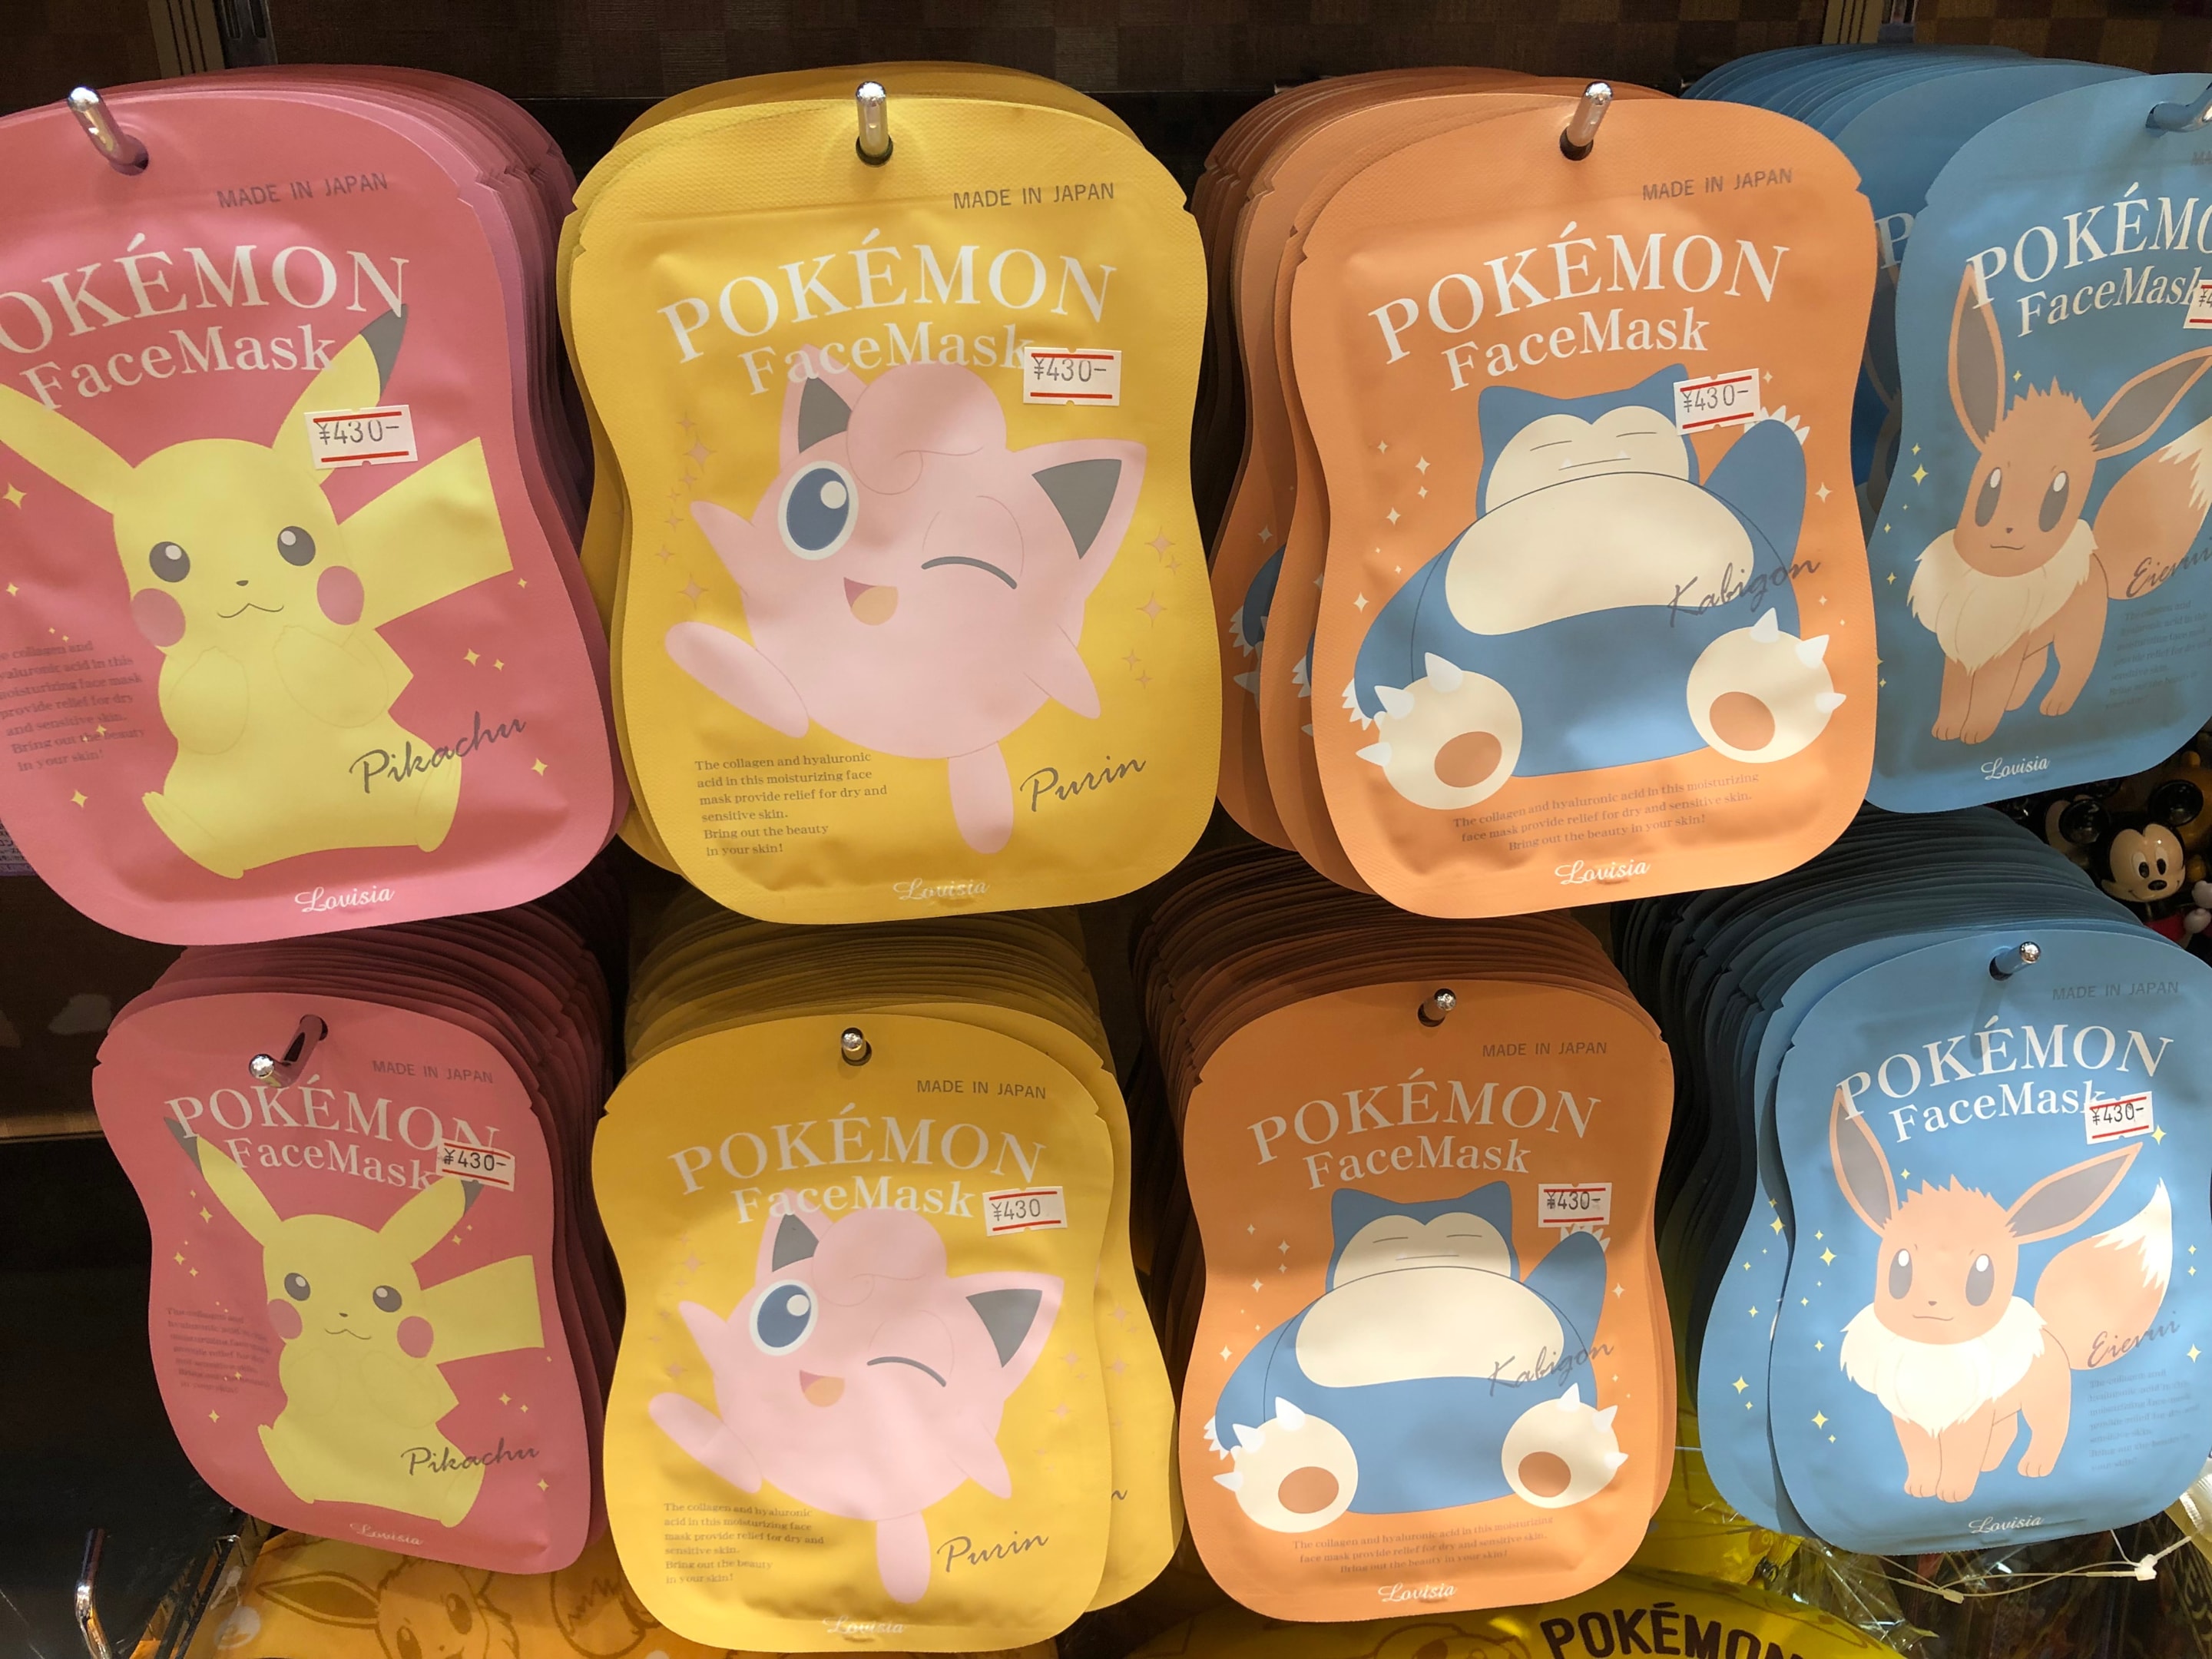 Pokémon Lovisia face mask sold in stores